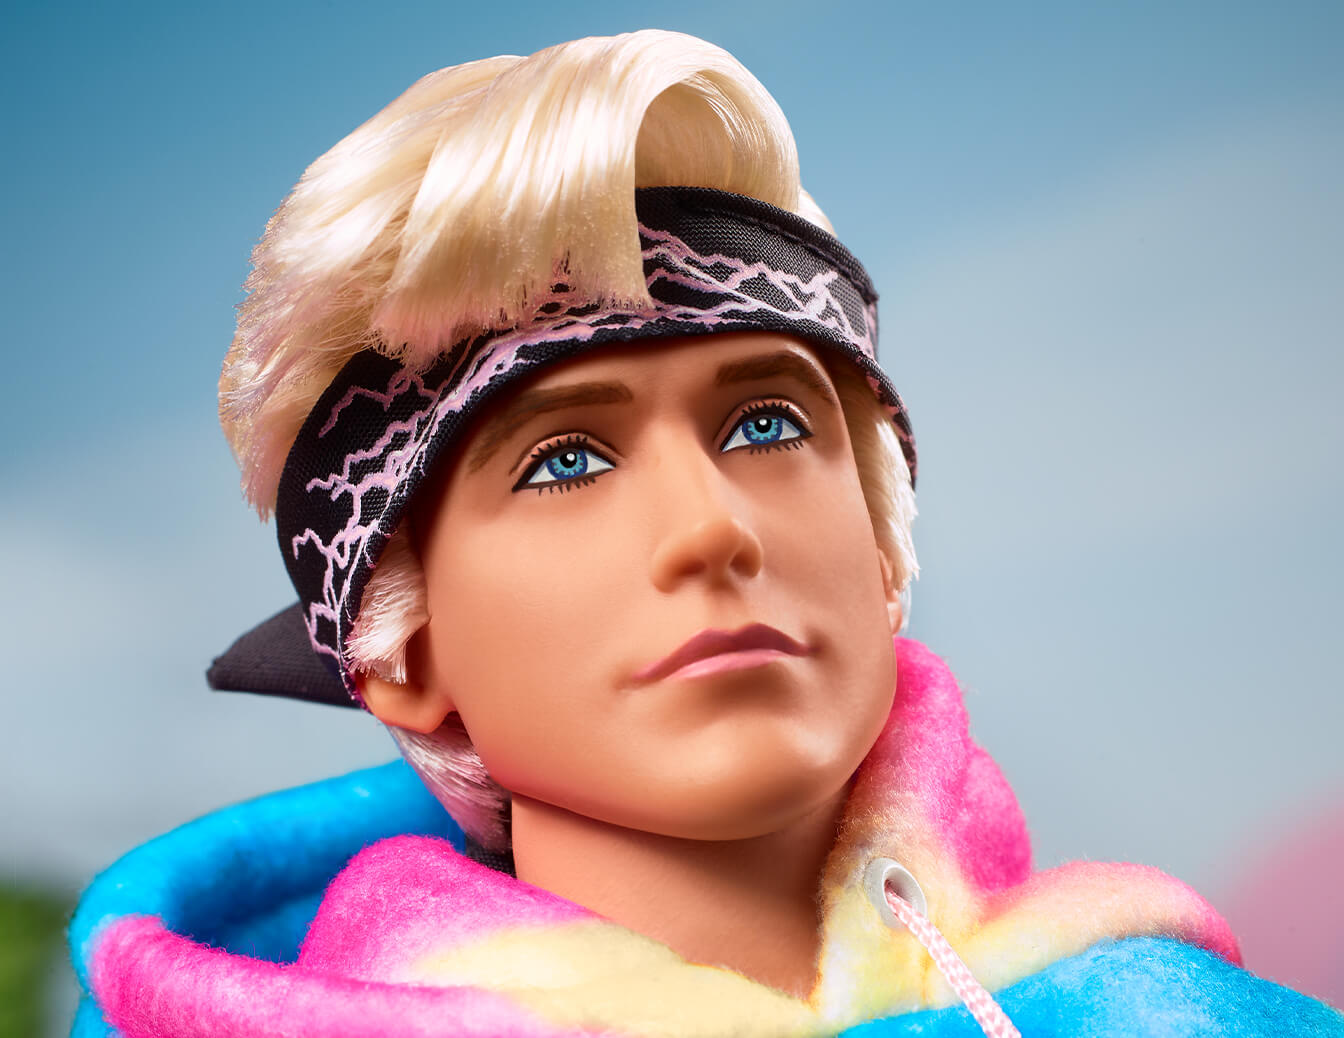 He's Kenough: Mattel launches Ryan Gosling's 'Ken' doll